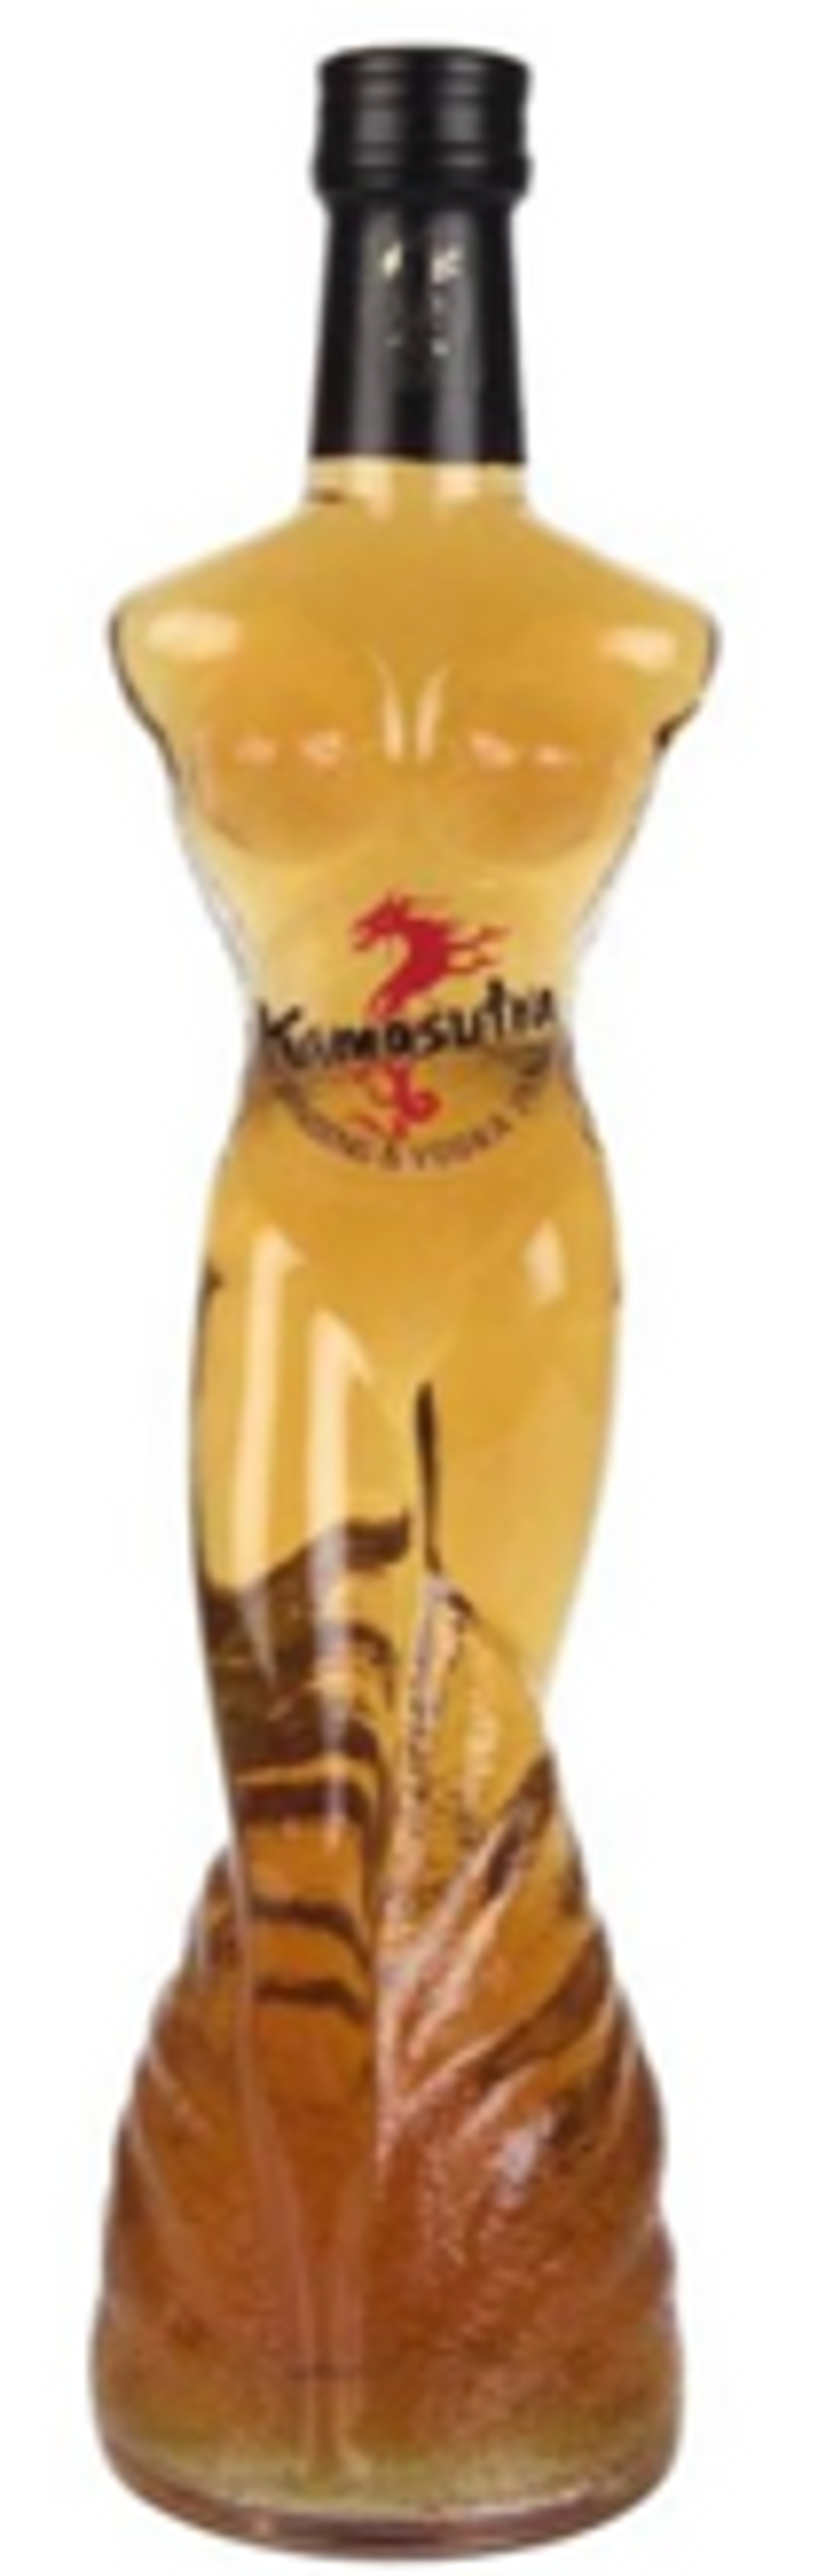 Kamasutra Ginseng &amp; Vodka 0.5l, alc. 25% by volume, vodka liqueur